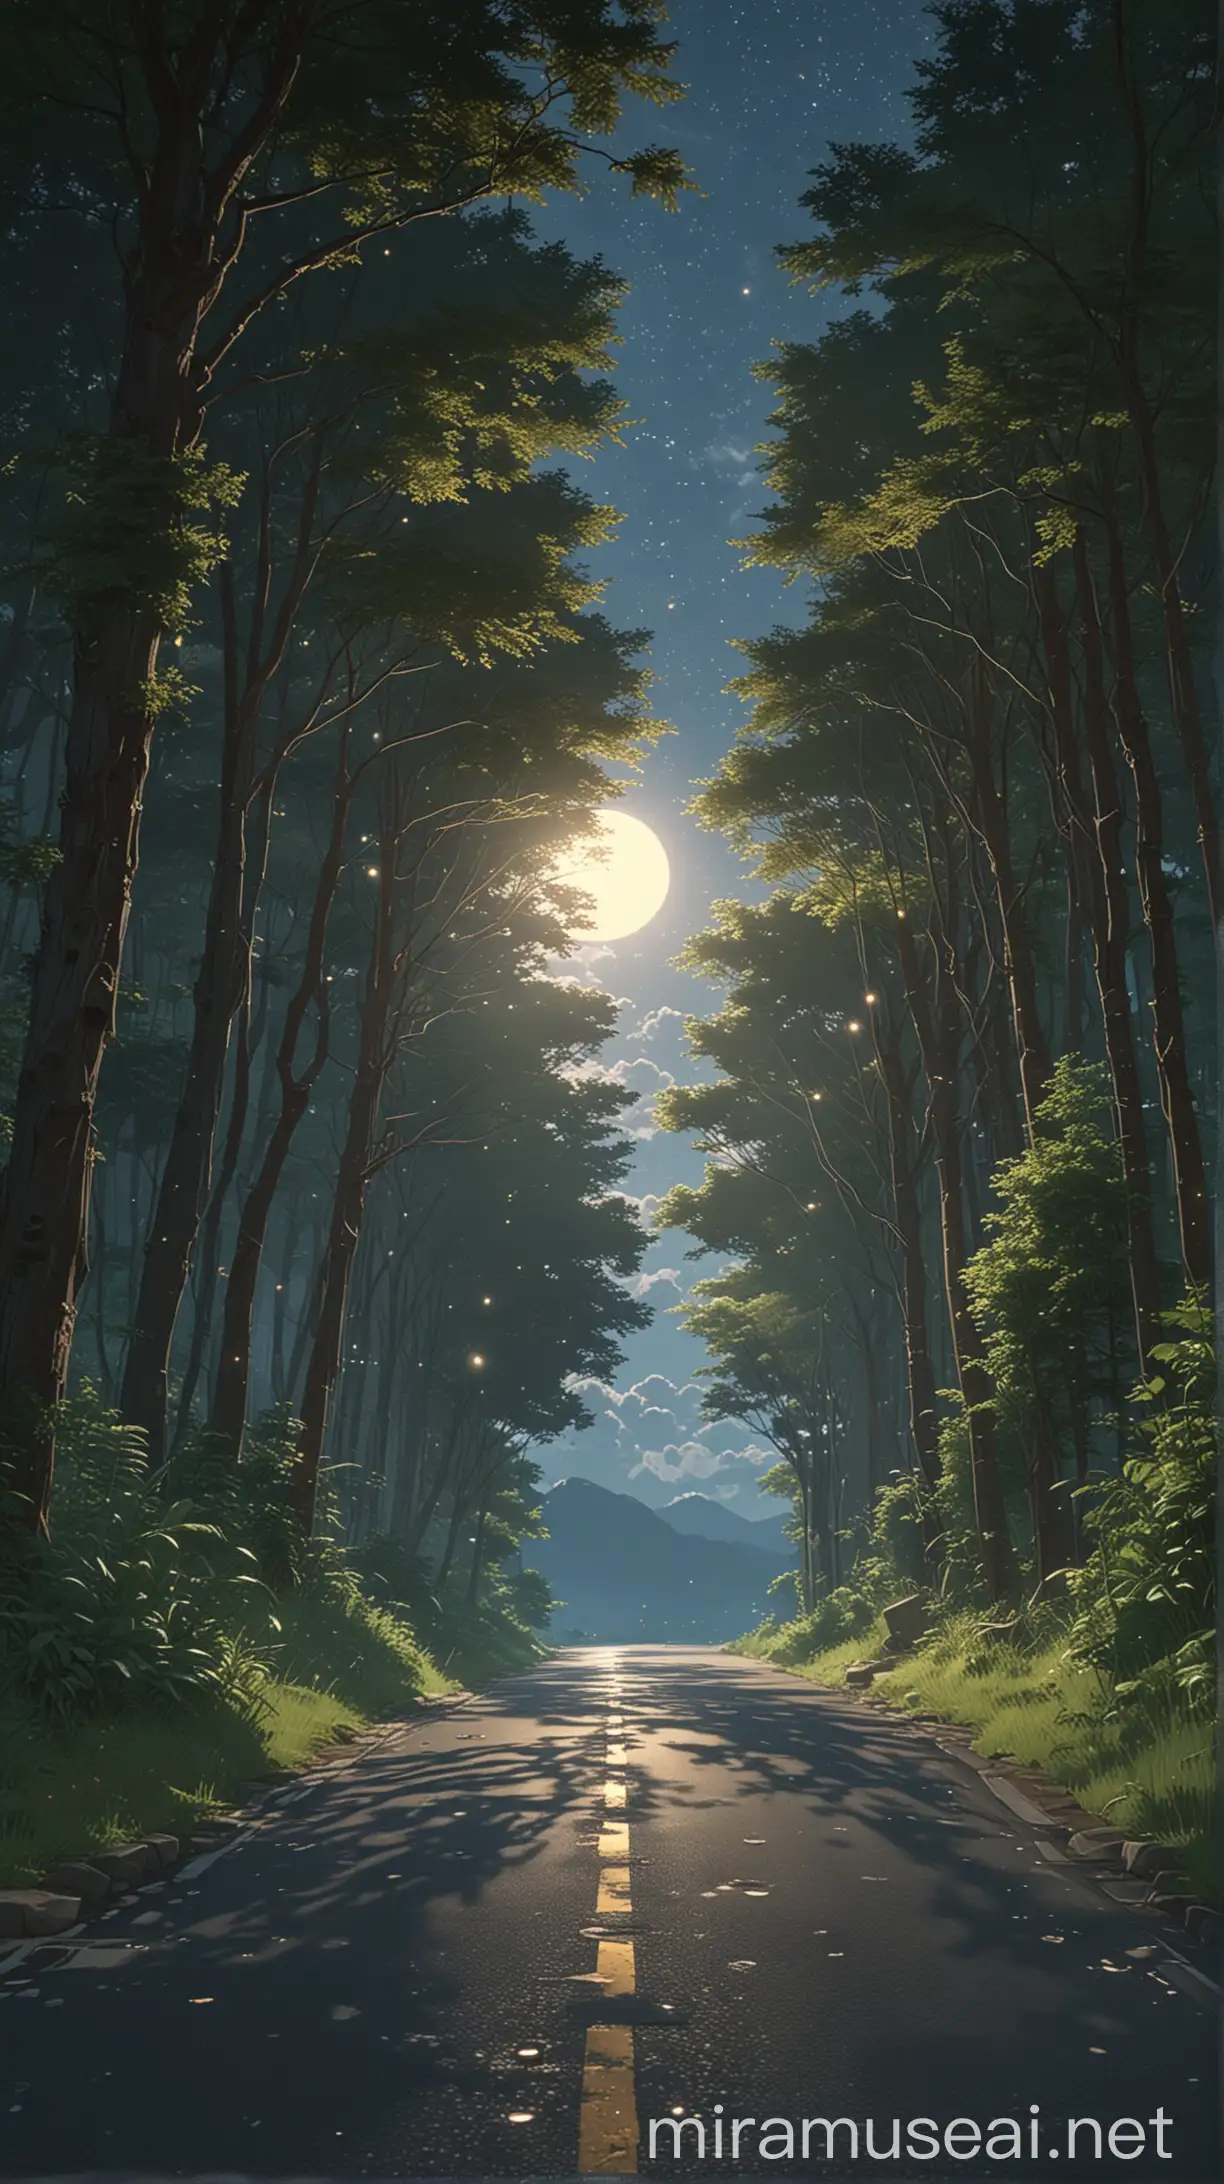 Enchanting Moonlit Anime Road Through Lush Forest